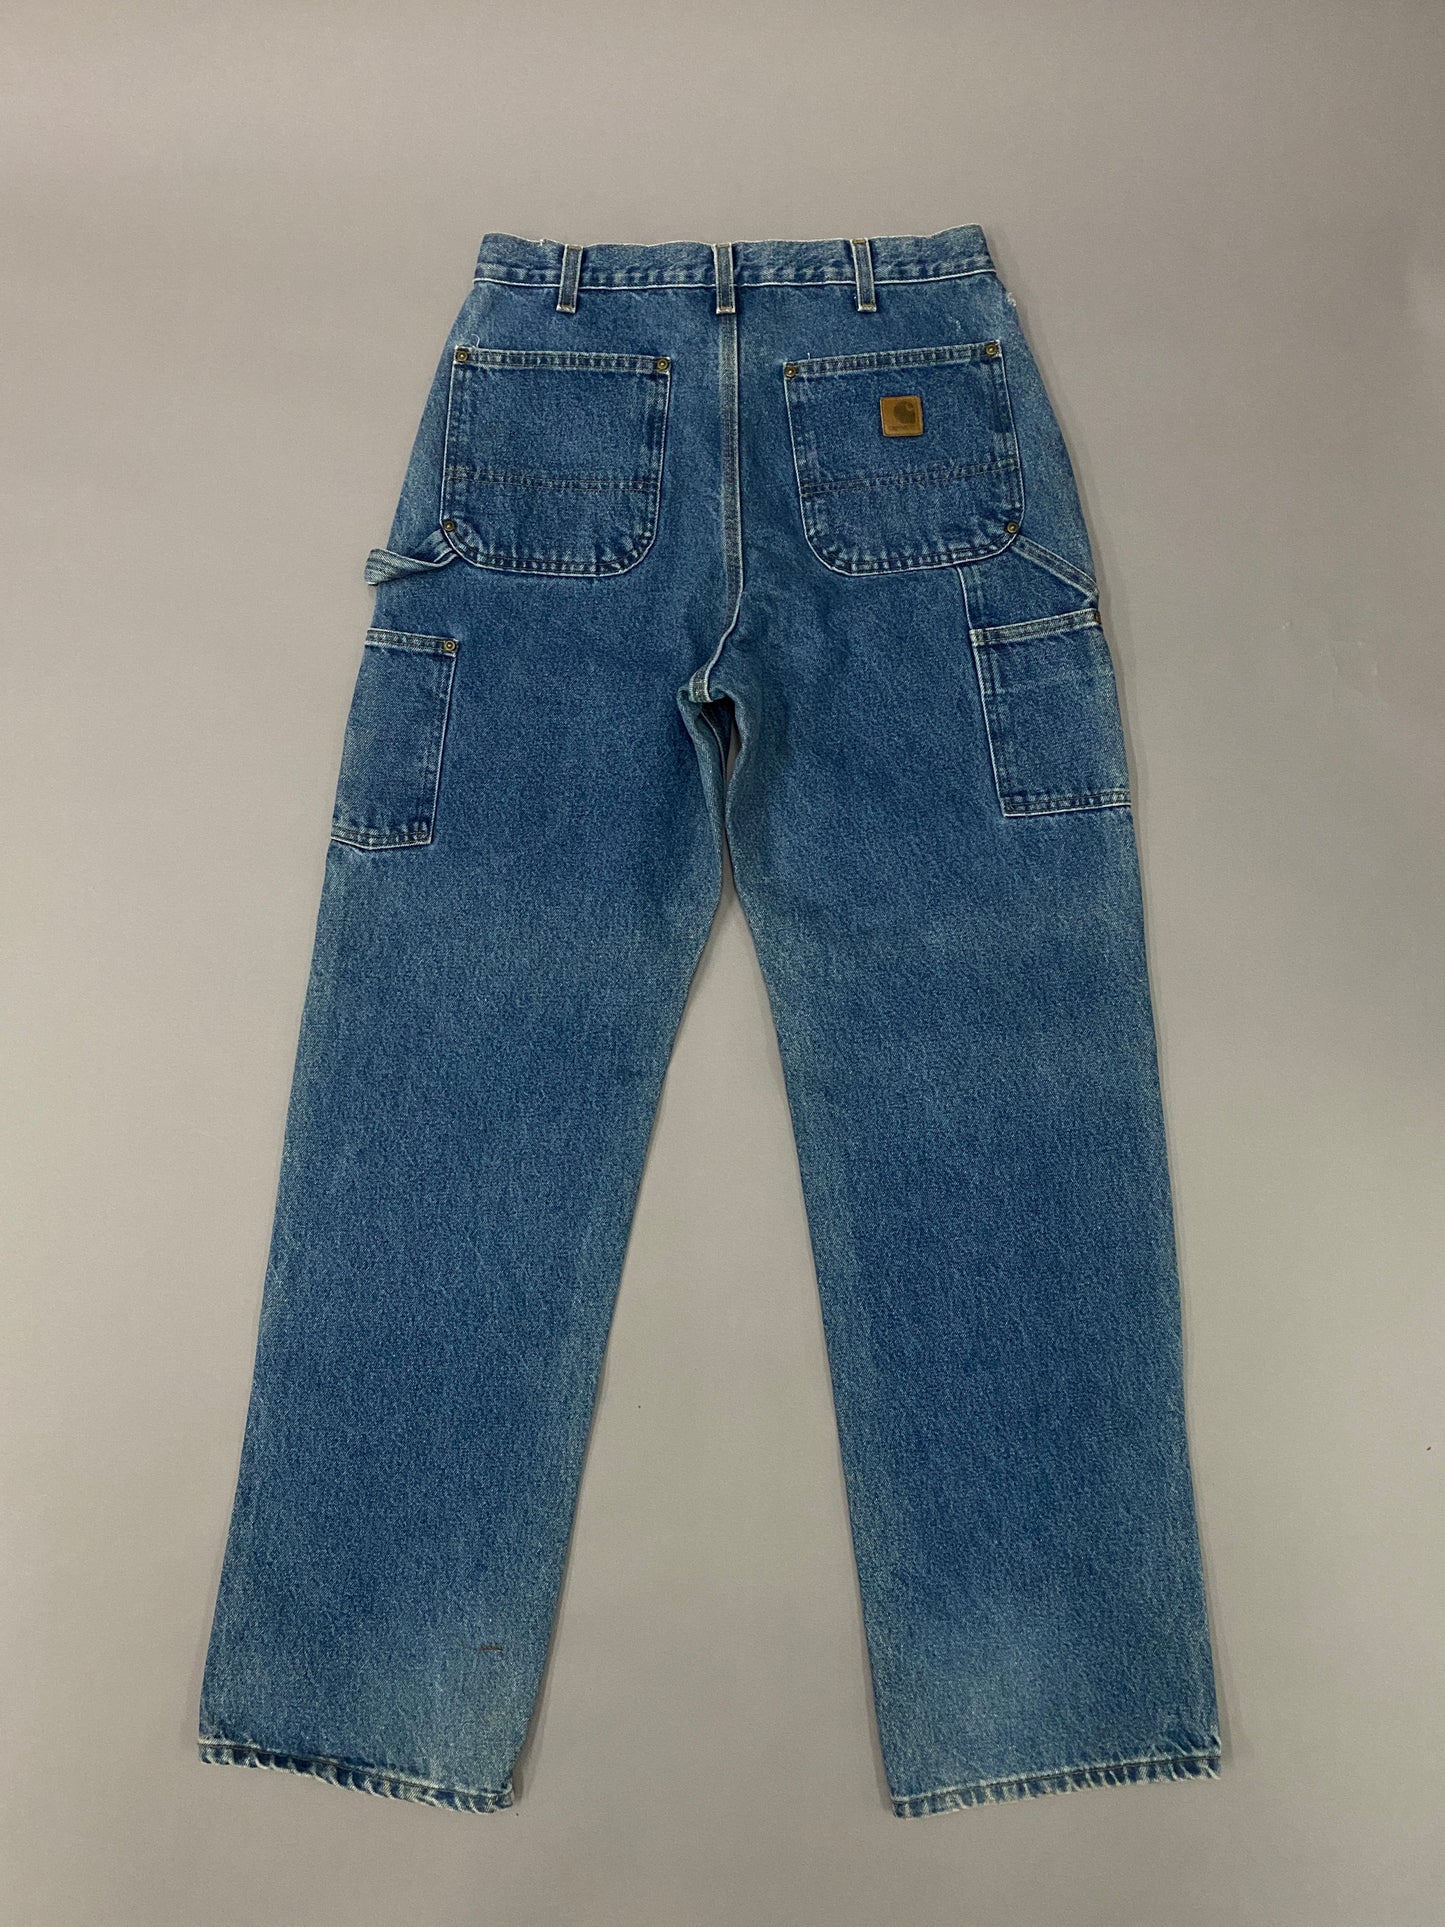 Double Knee Carhartt Jeans Vintage - 33 x 34